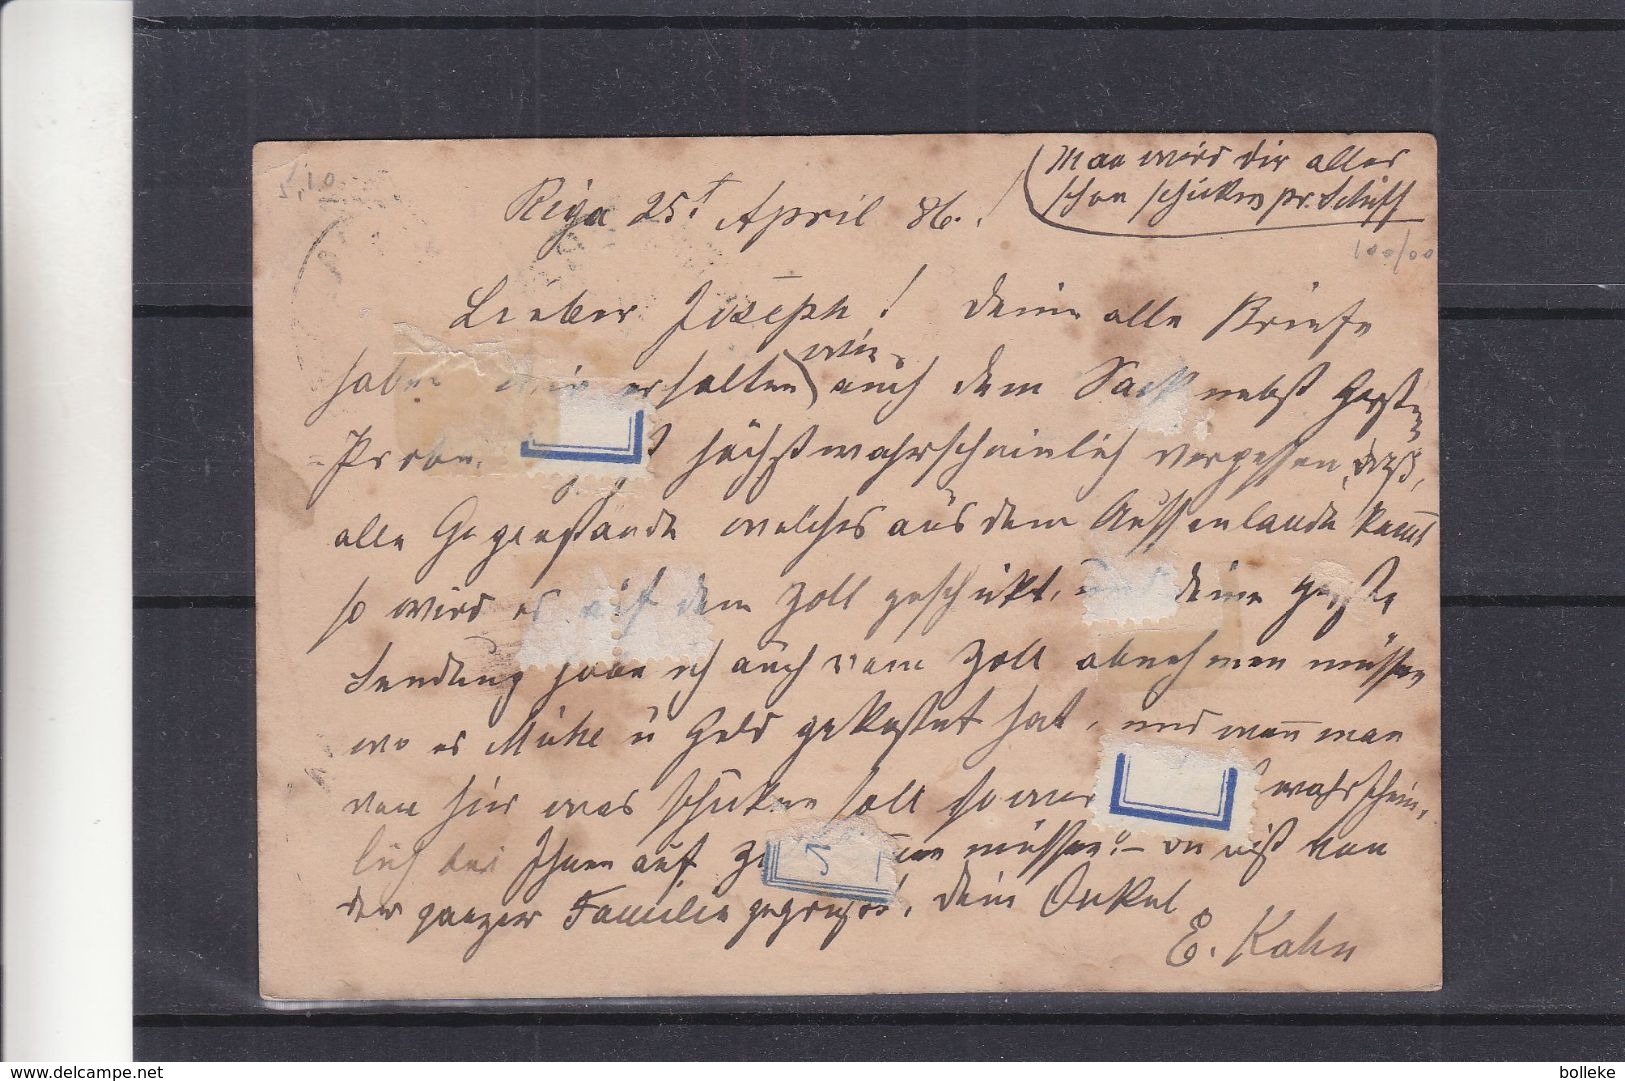 Russie - Lettonie - Carte Postale De 1886 - Entier Postal - Oblit Riga - Exp Vers Anvers En Belgique - Briefe U. Dokumente